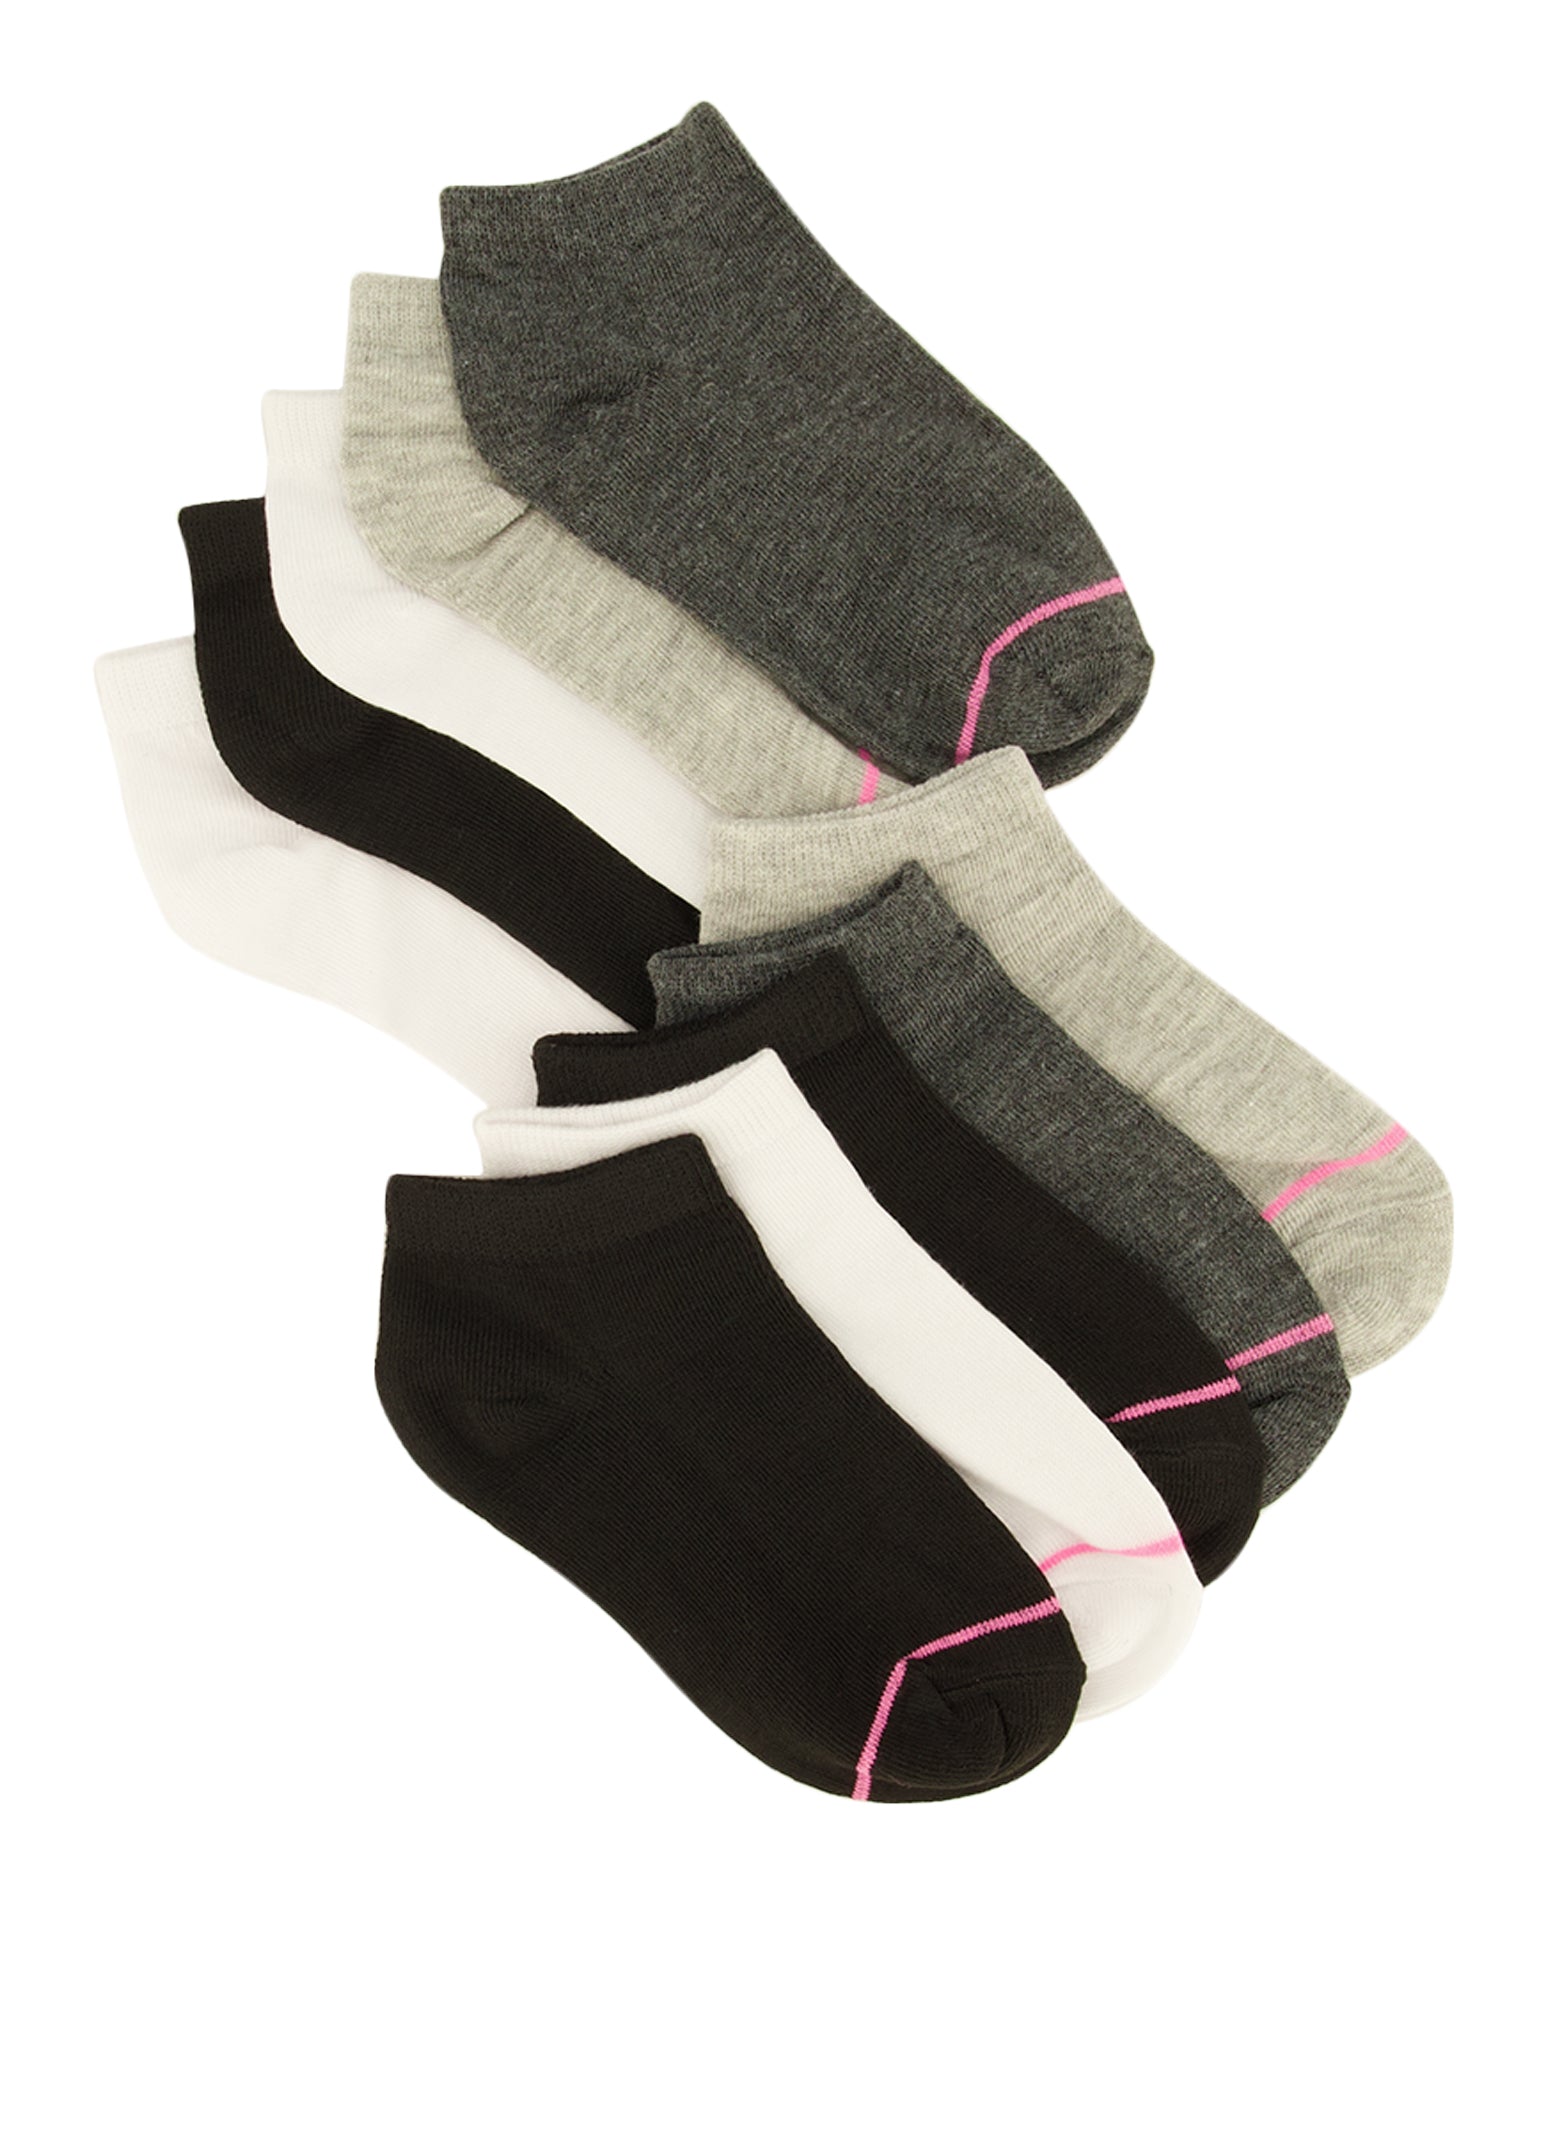 Toddler Girls Assorted Ankle Socks 10 Pack